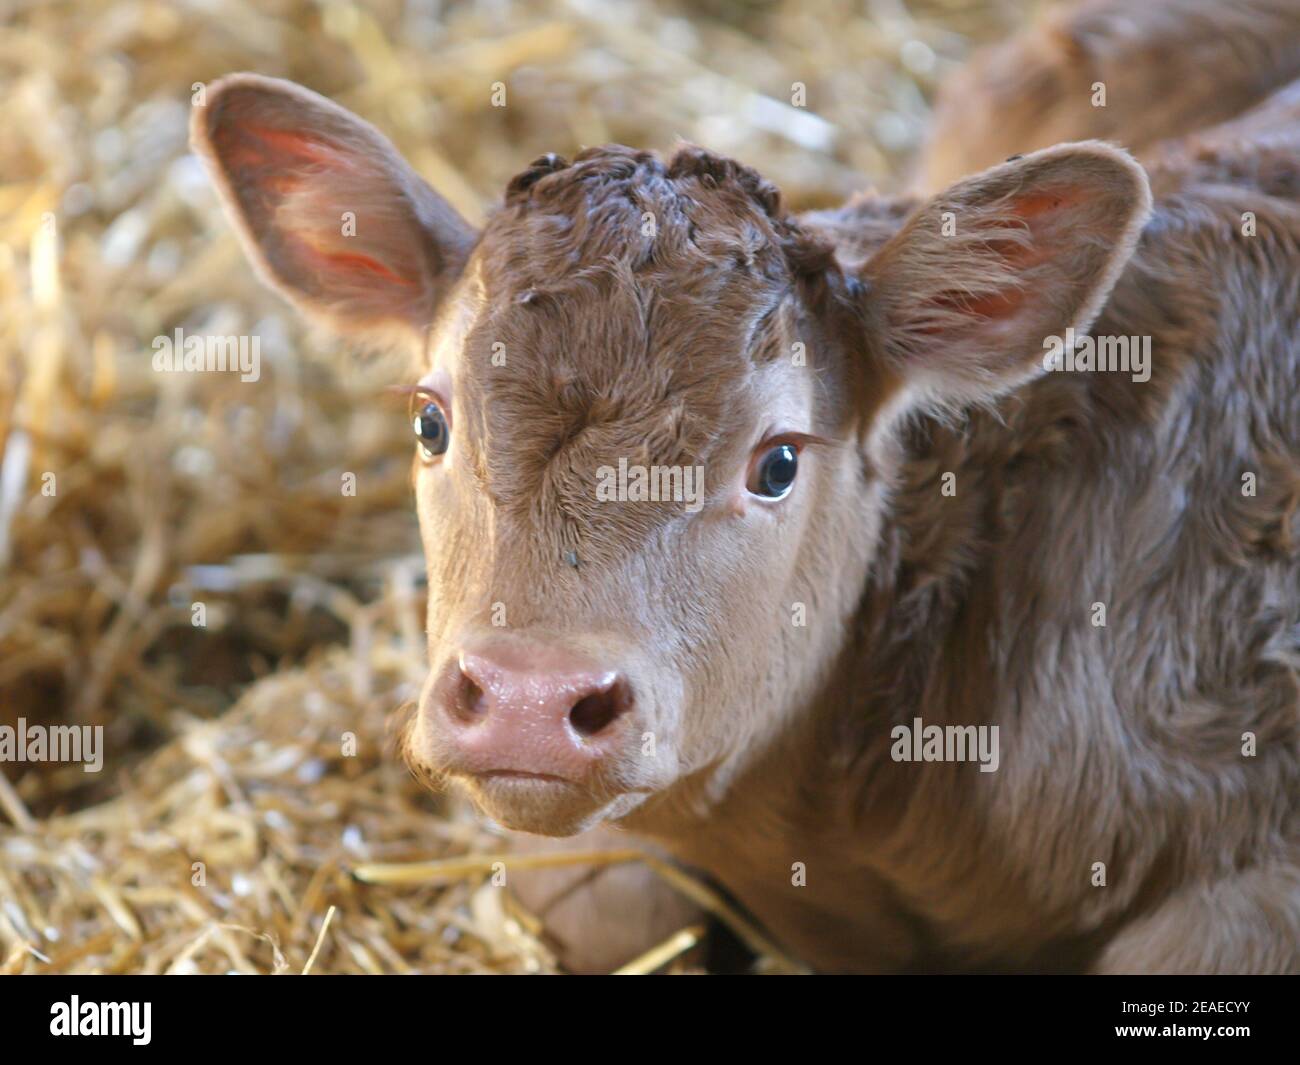 A headshot of a new born calf in a barn. Stock Photo